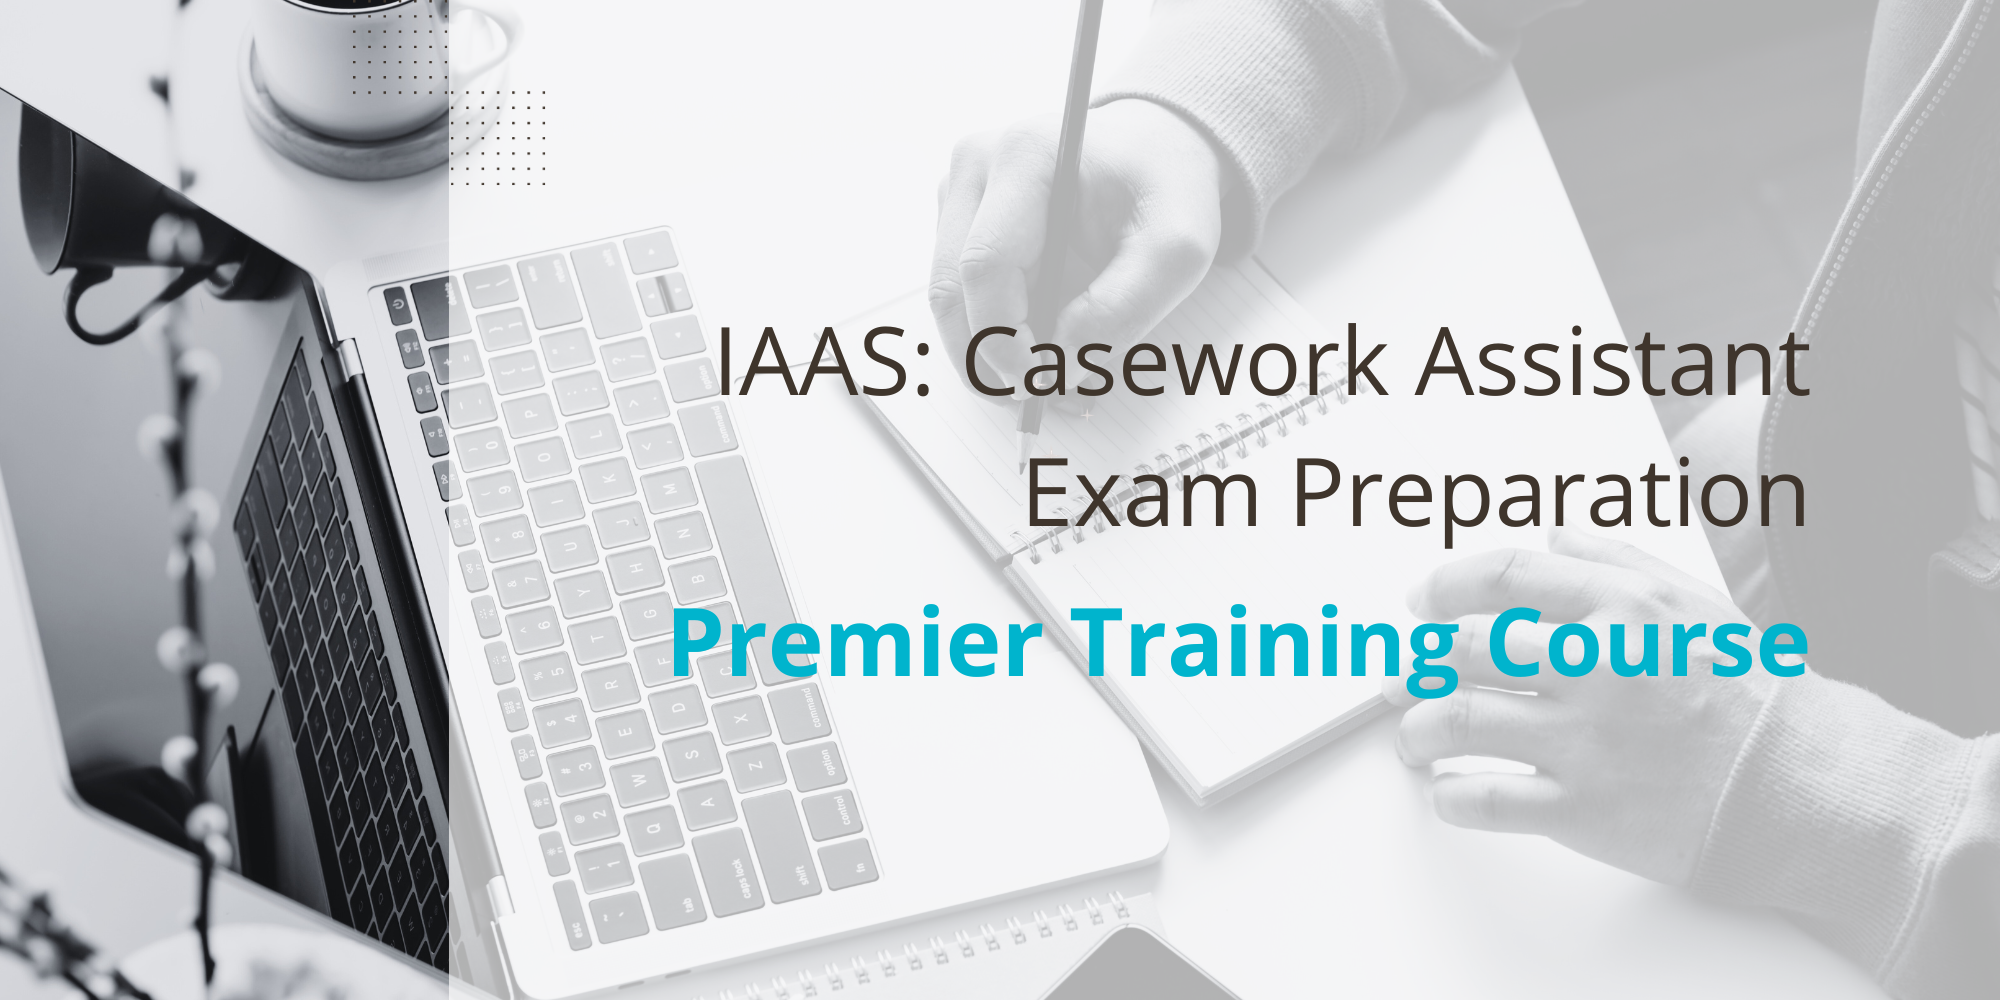 IAAS: Casework Assistant Exam Preparation Course